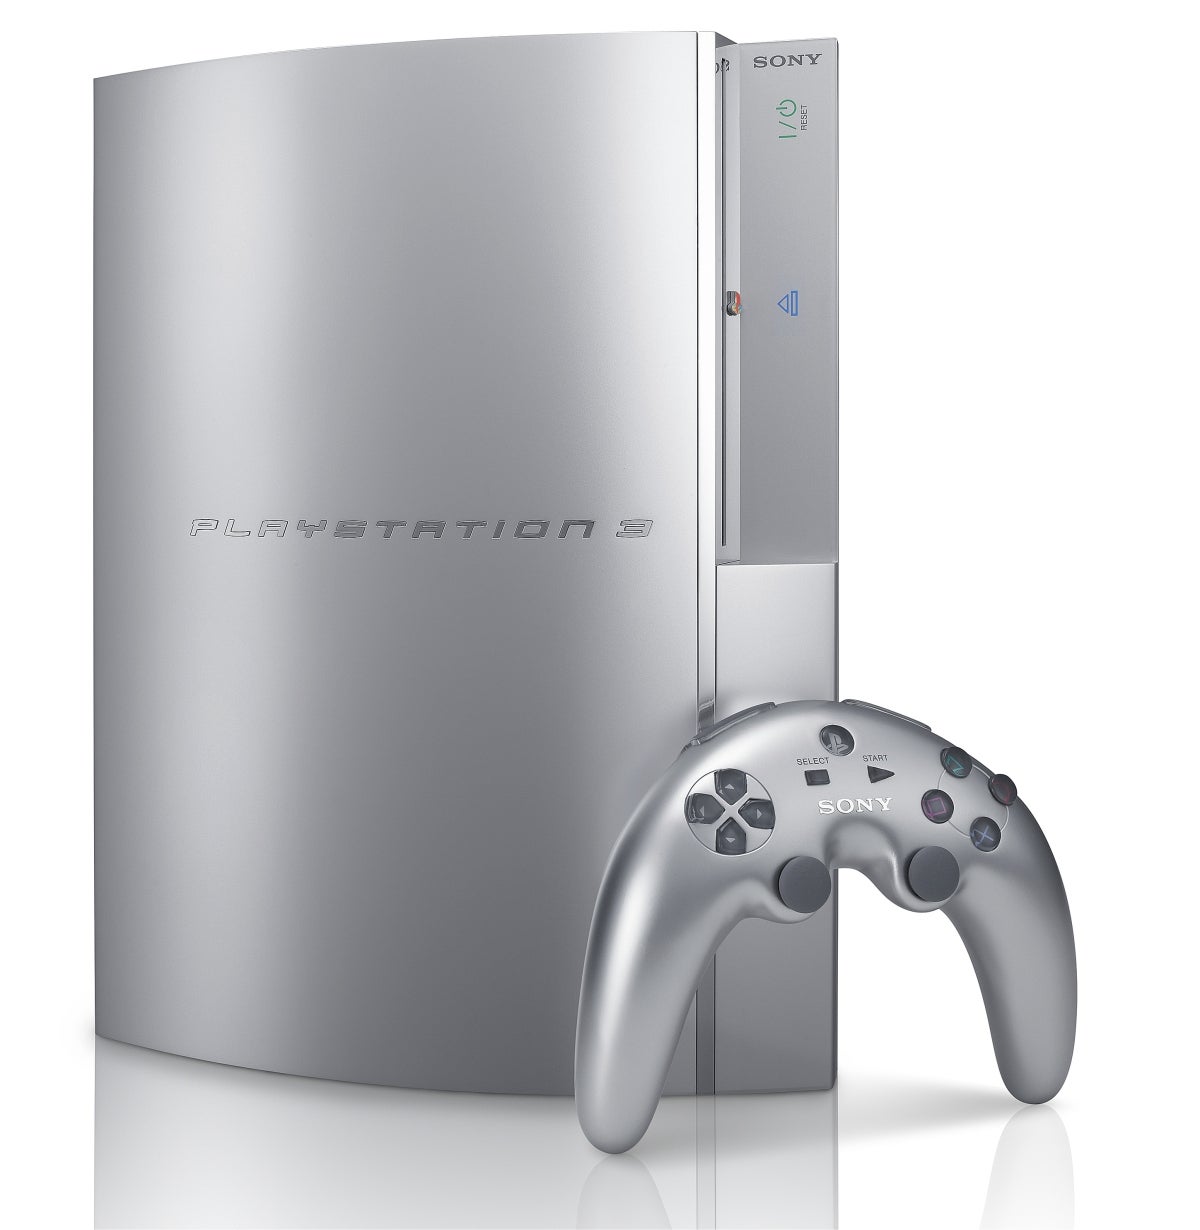 PlayStation 3 - The Real Next Generation | Eurogamer.net